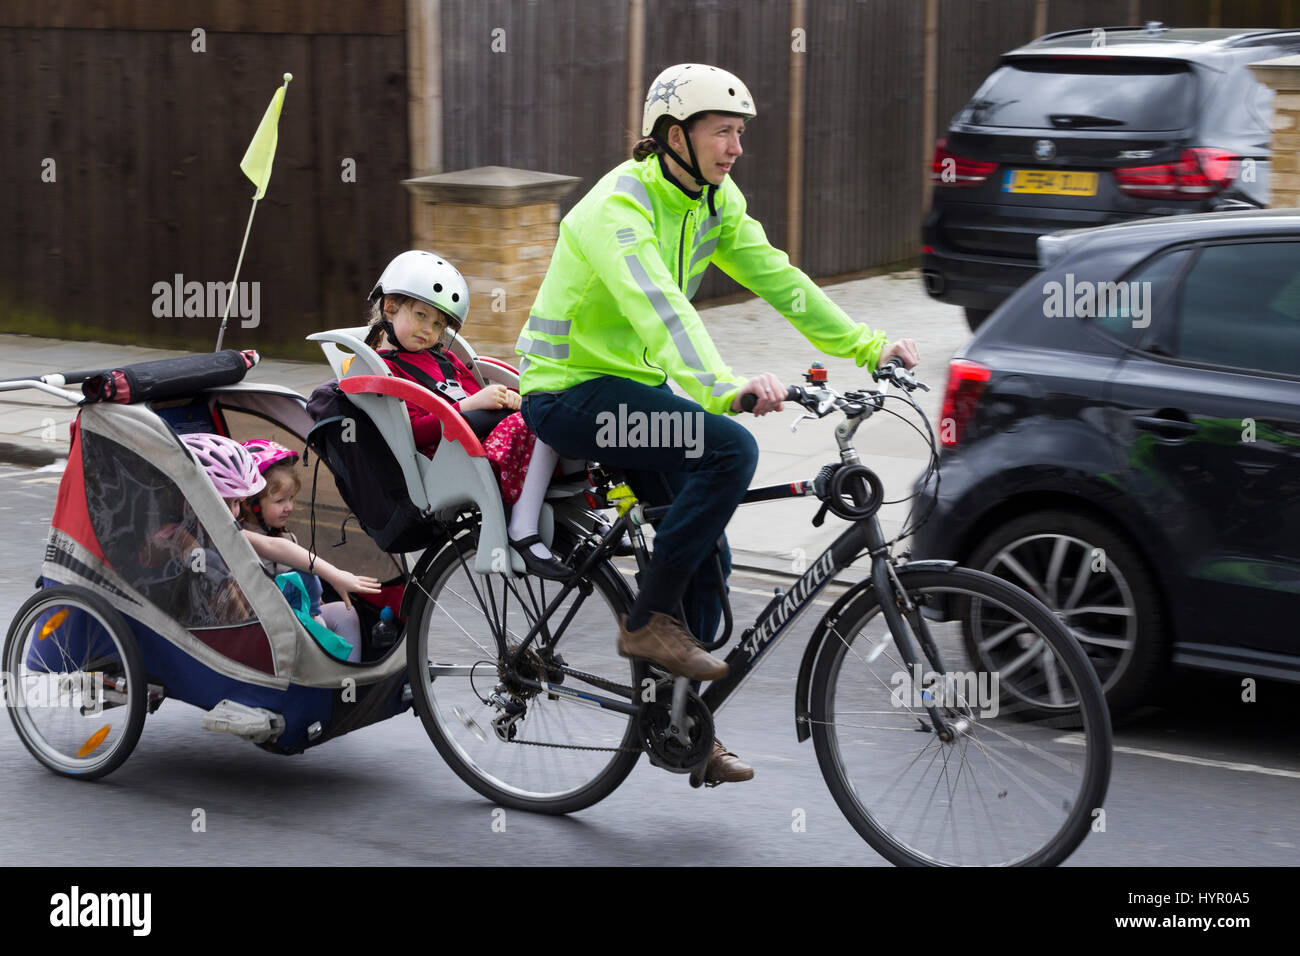 Frau Radfahrer auf Bike / Fahrrad mit + 3 Kinder; Co-Pilot